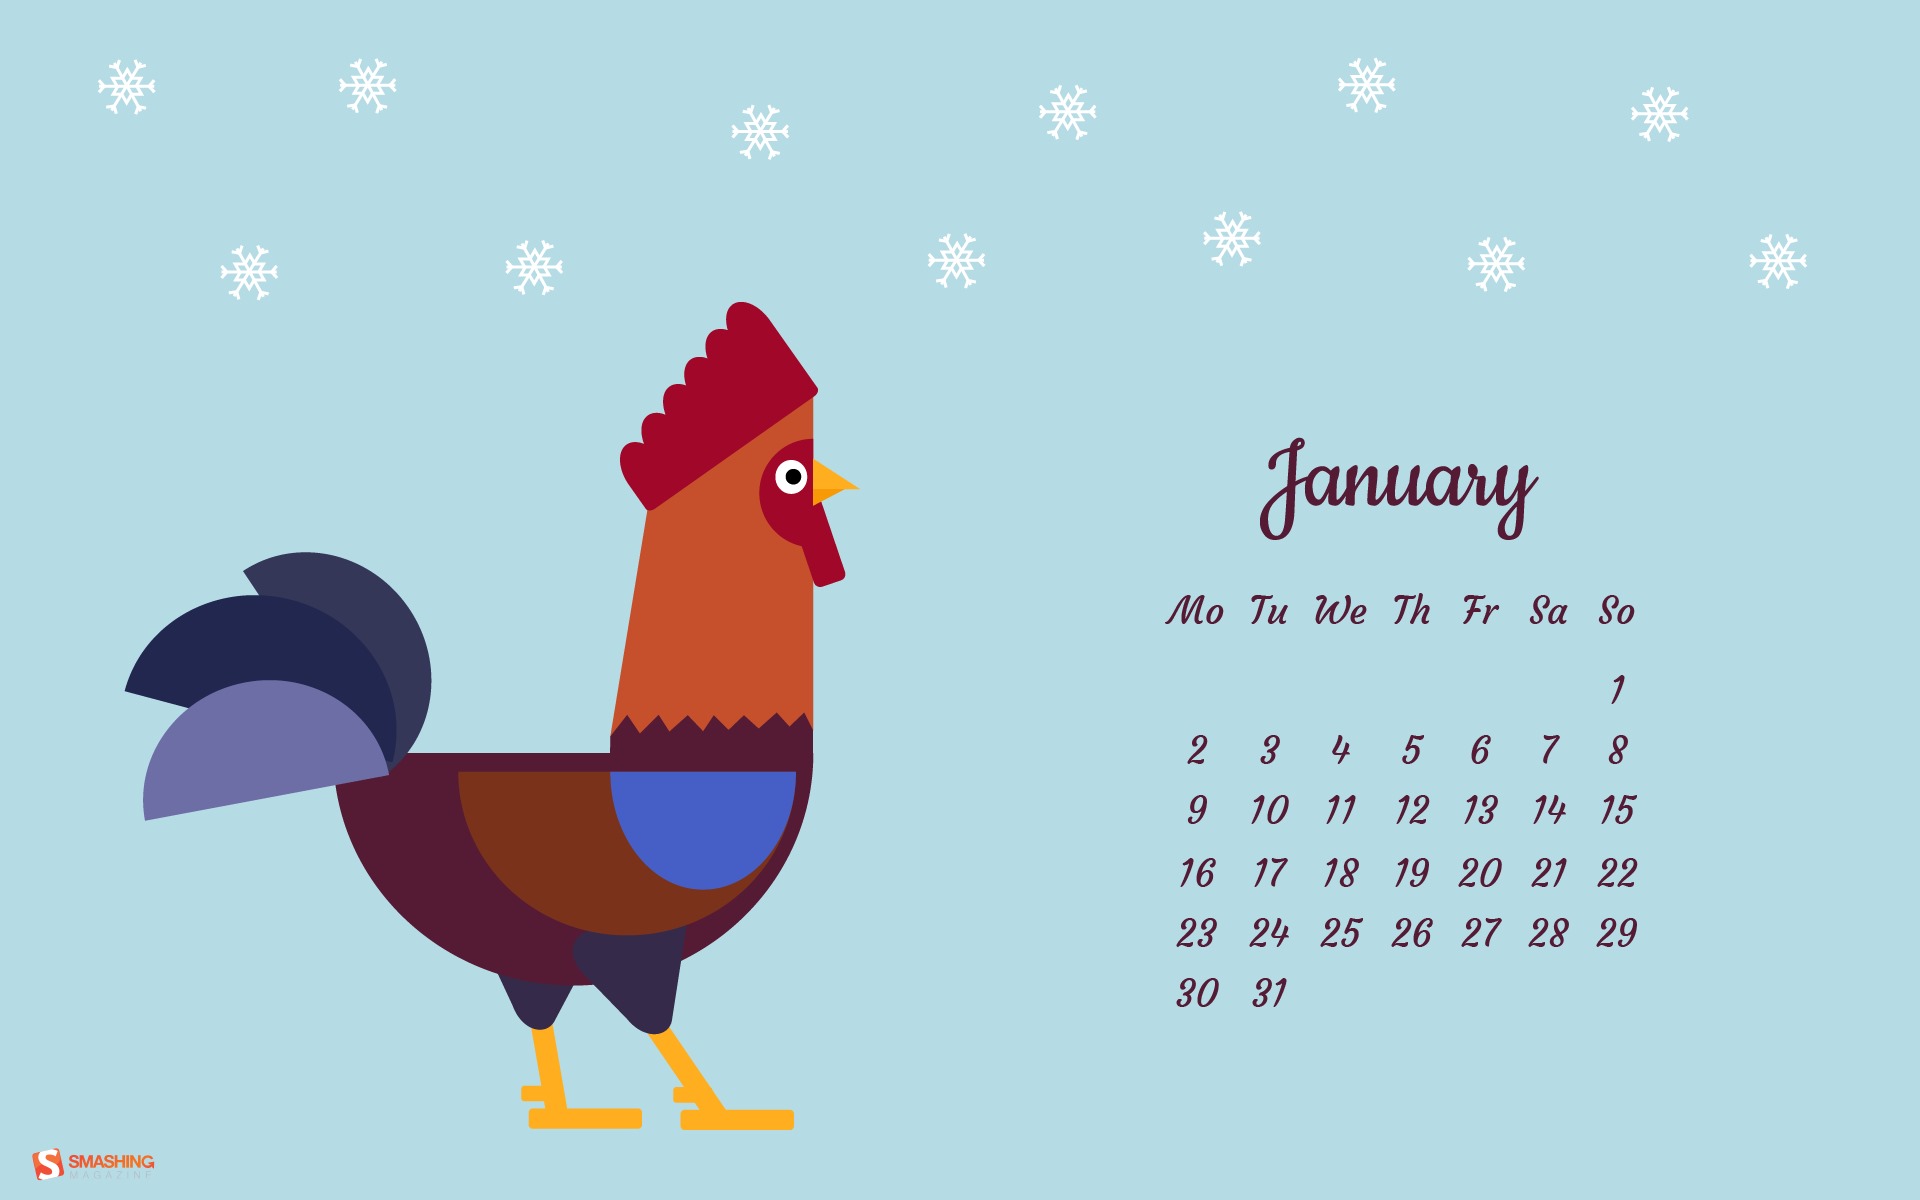 Fondos de calendario de enero de 2017 (2) #15 - 1920x1200